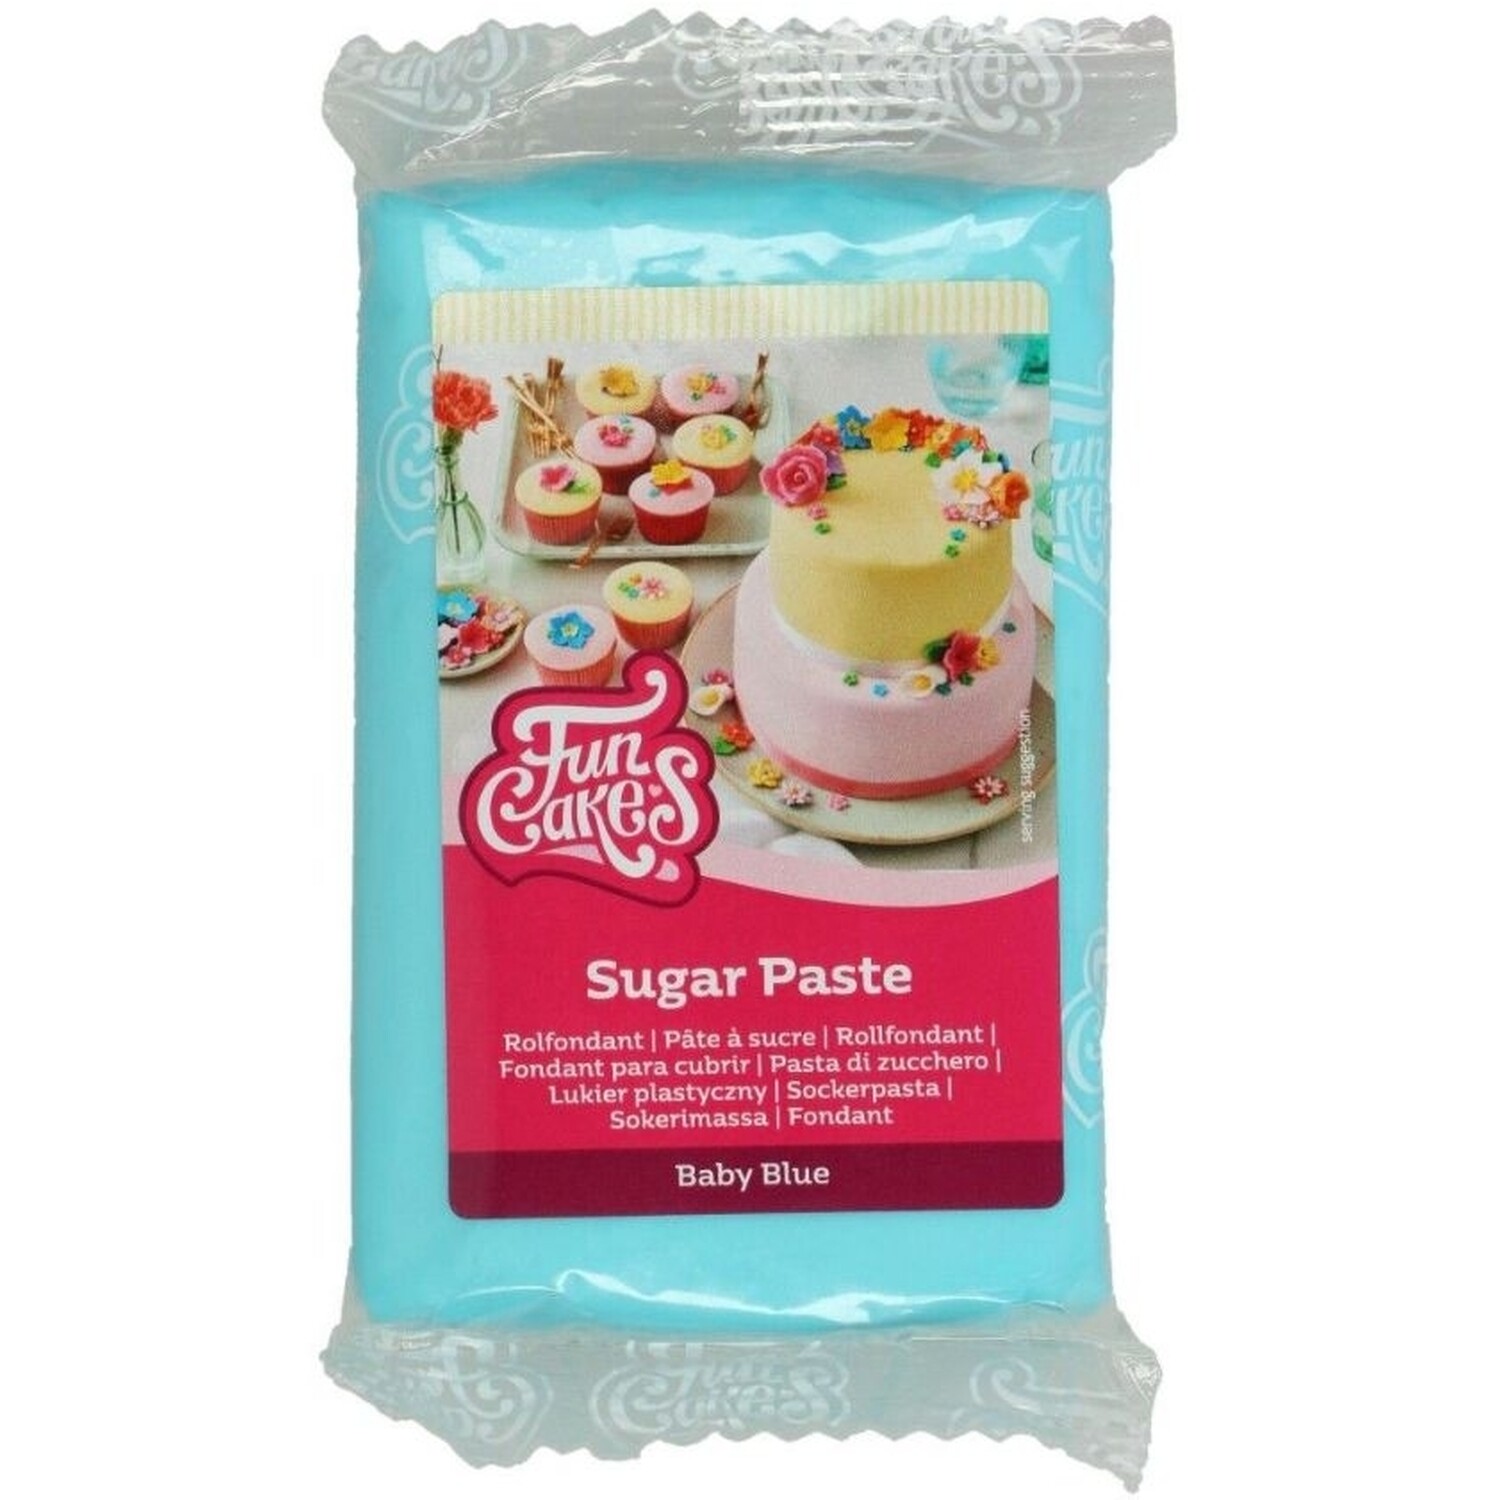 Funcakes Sugar Paste - Baby Blue Image 1